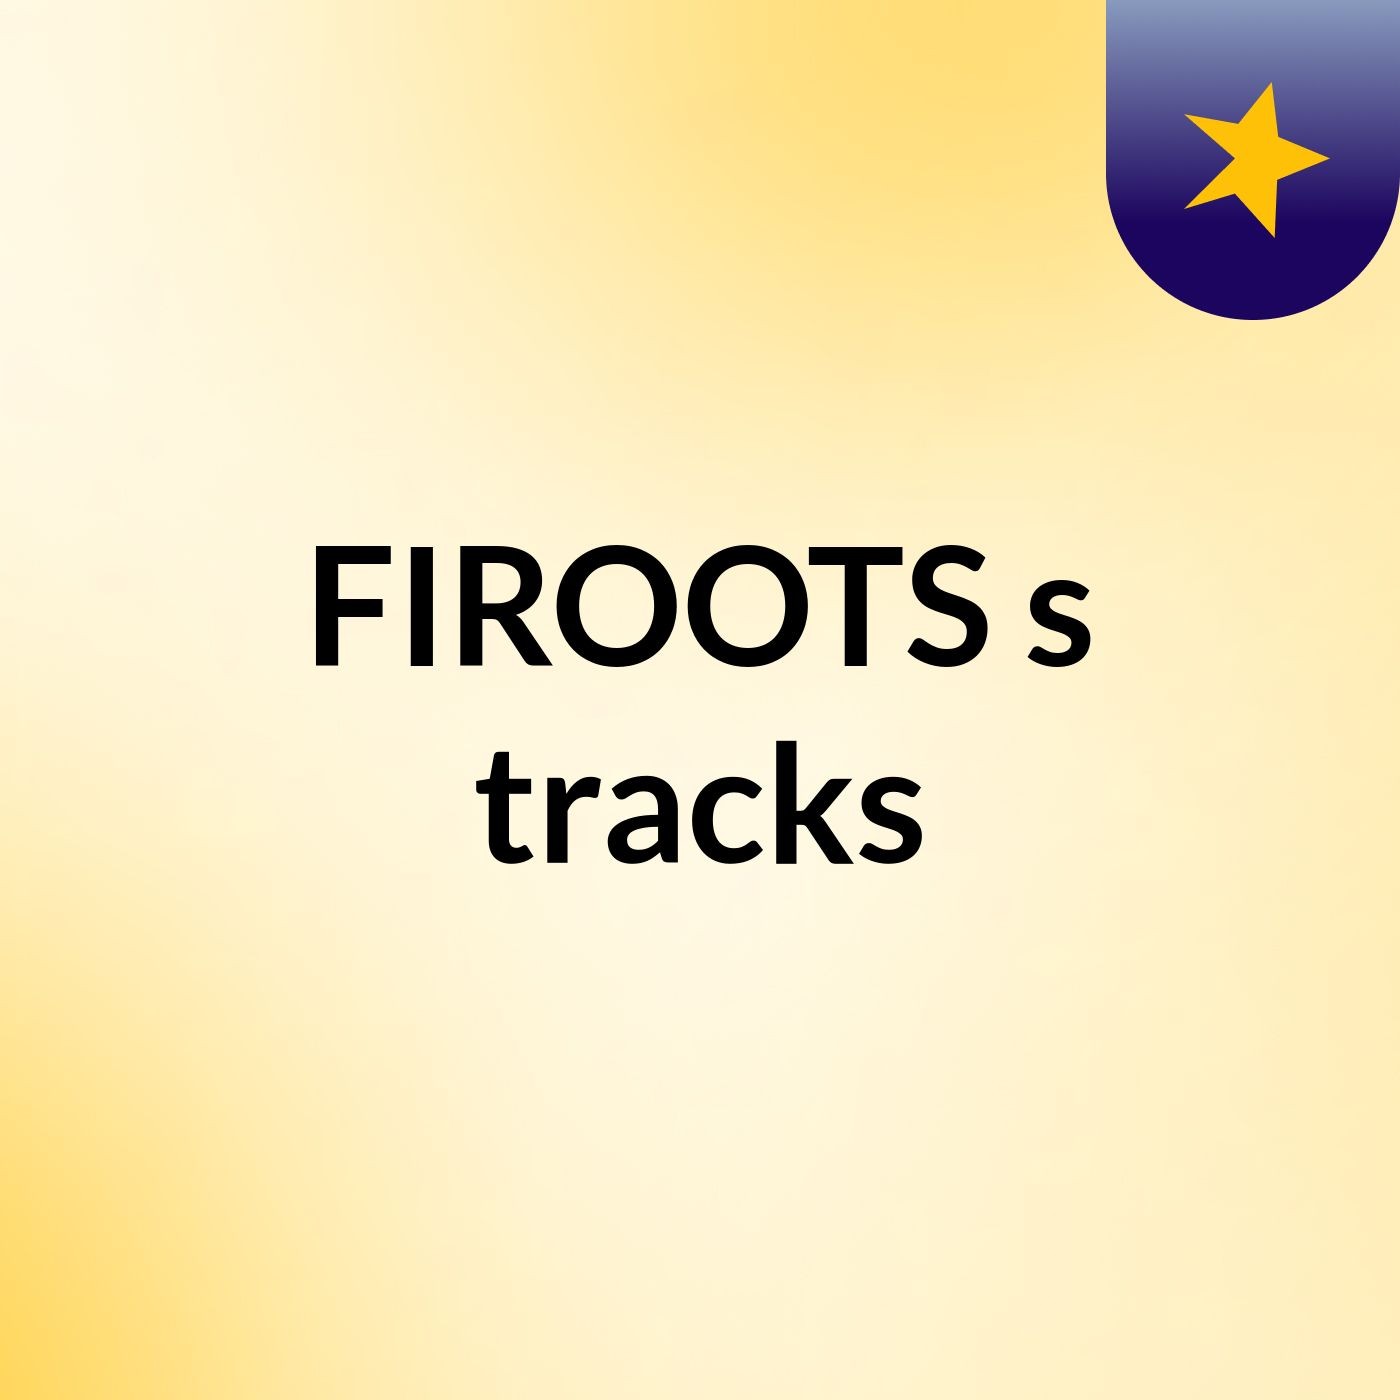 FIROOTS's tracks